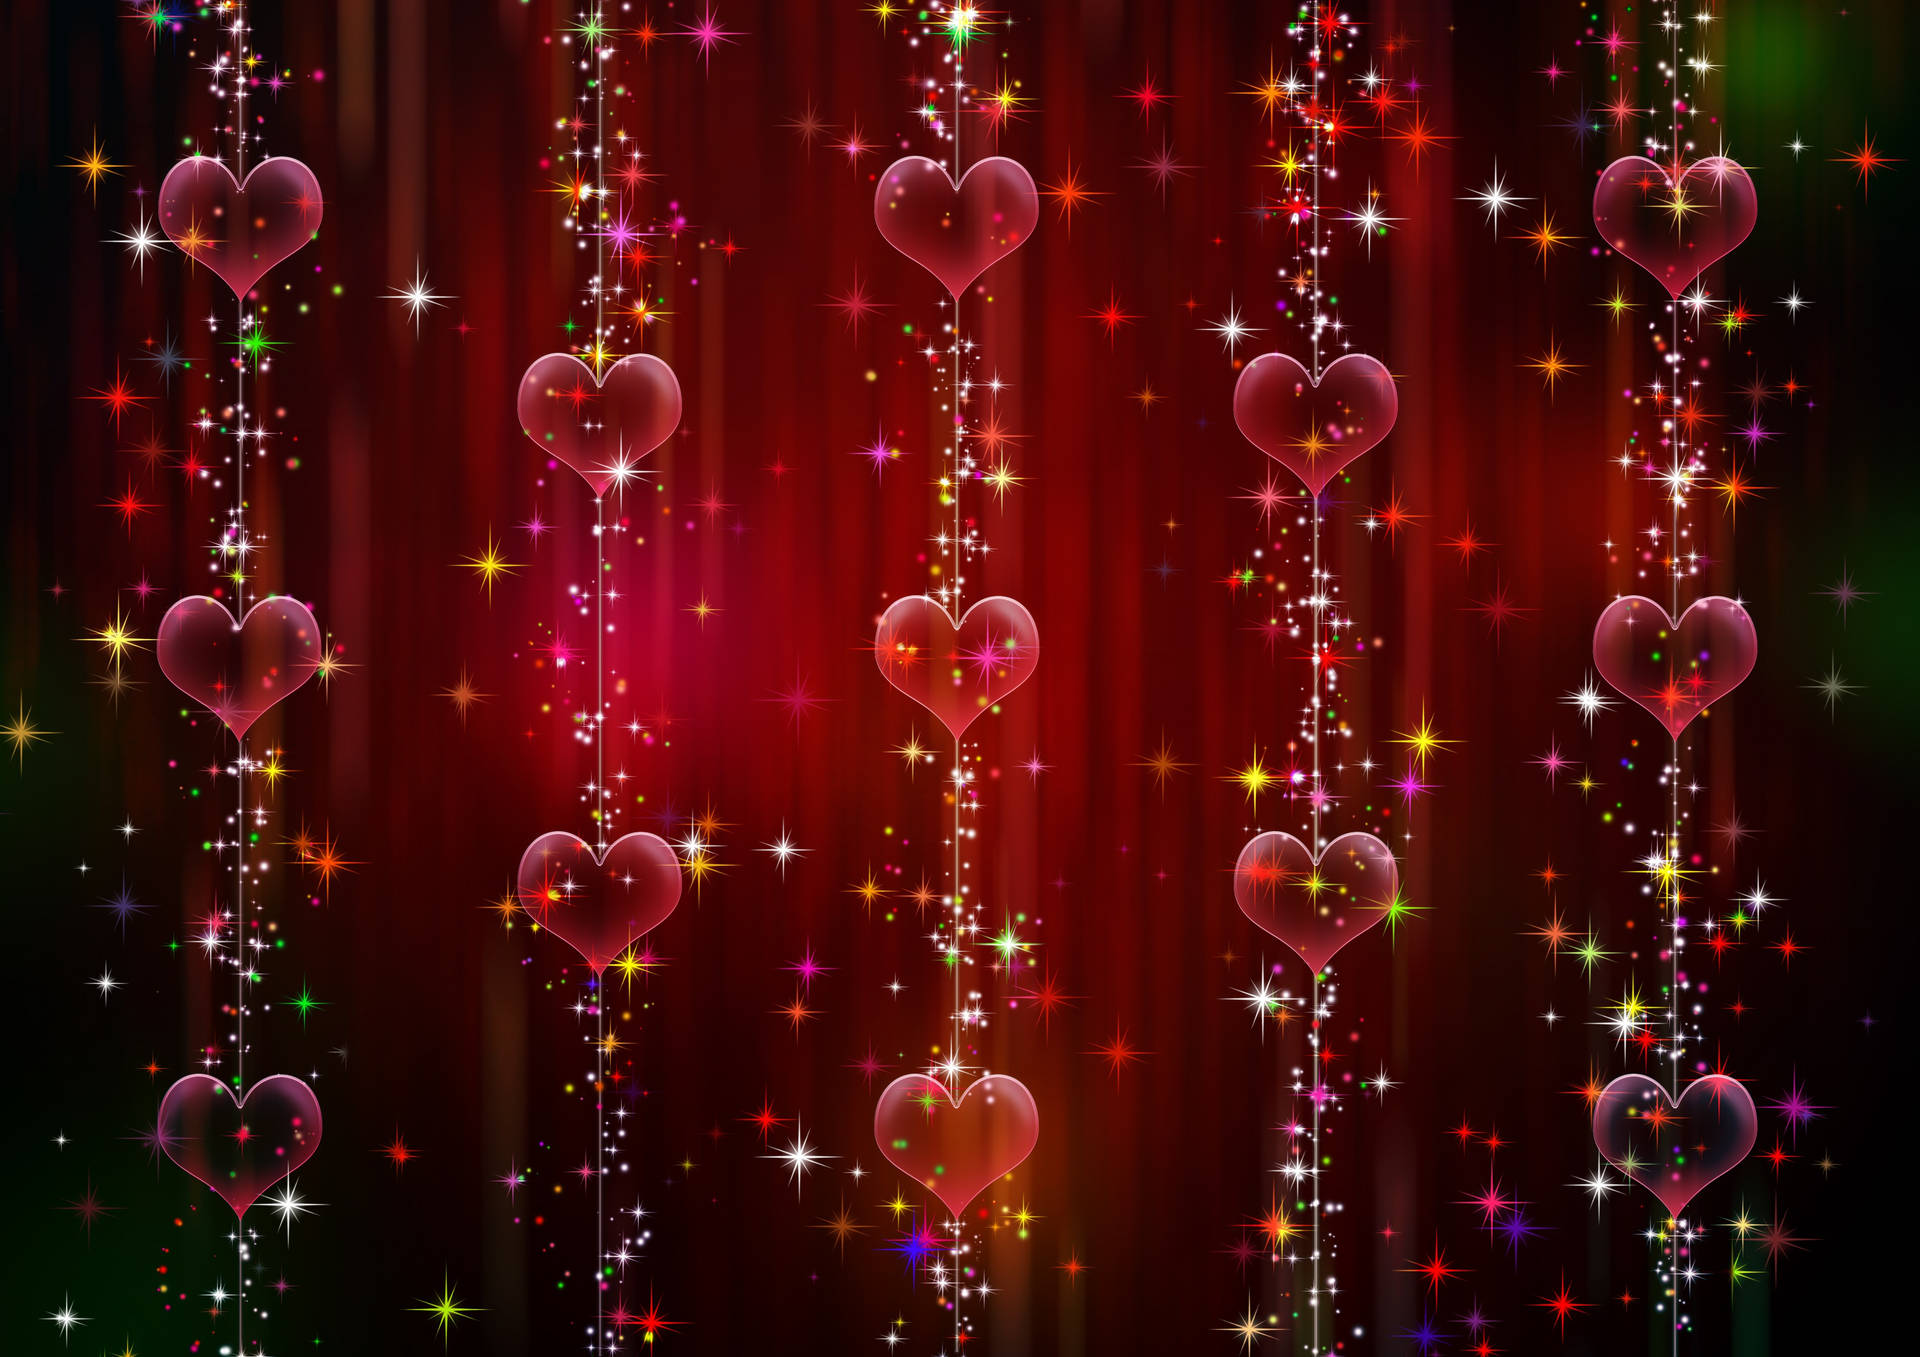 Shiny Red Hearts On Curtain